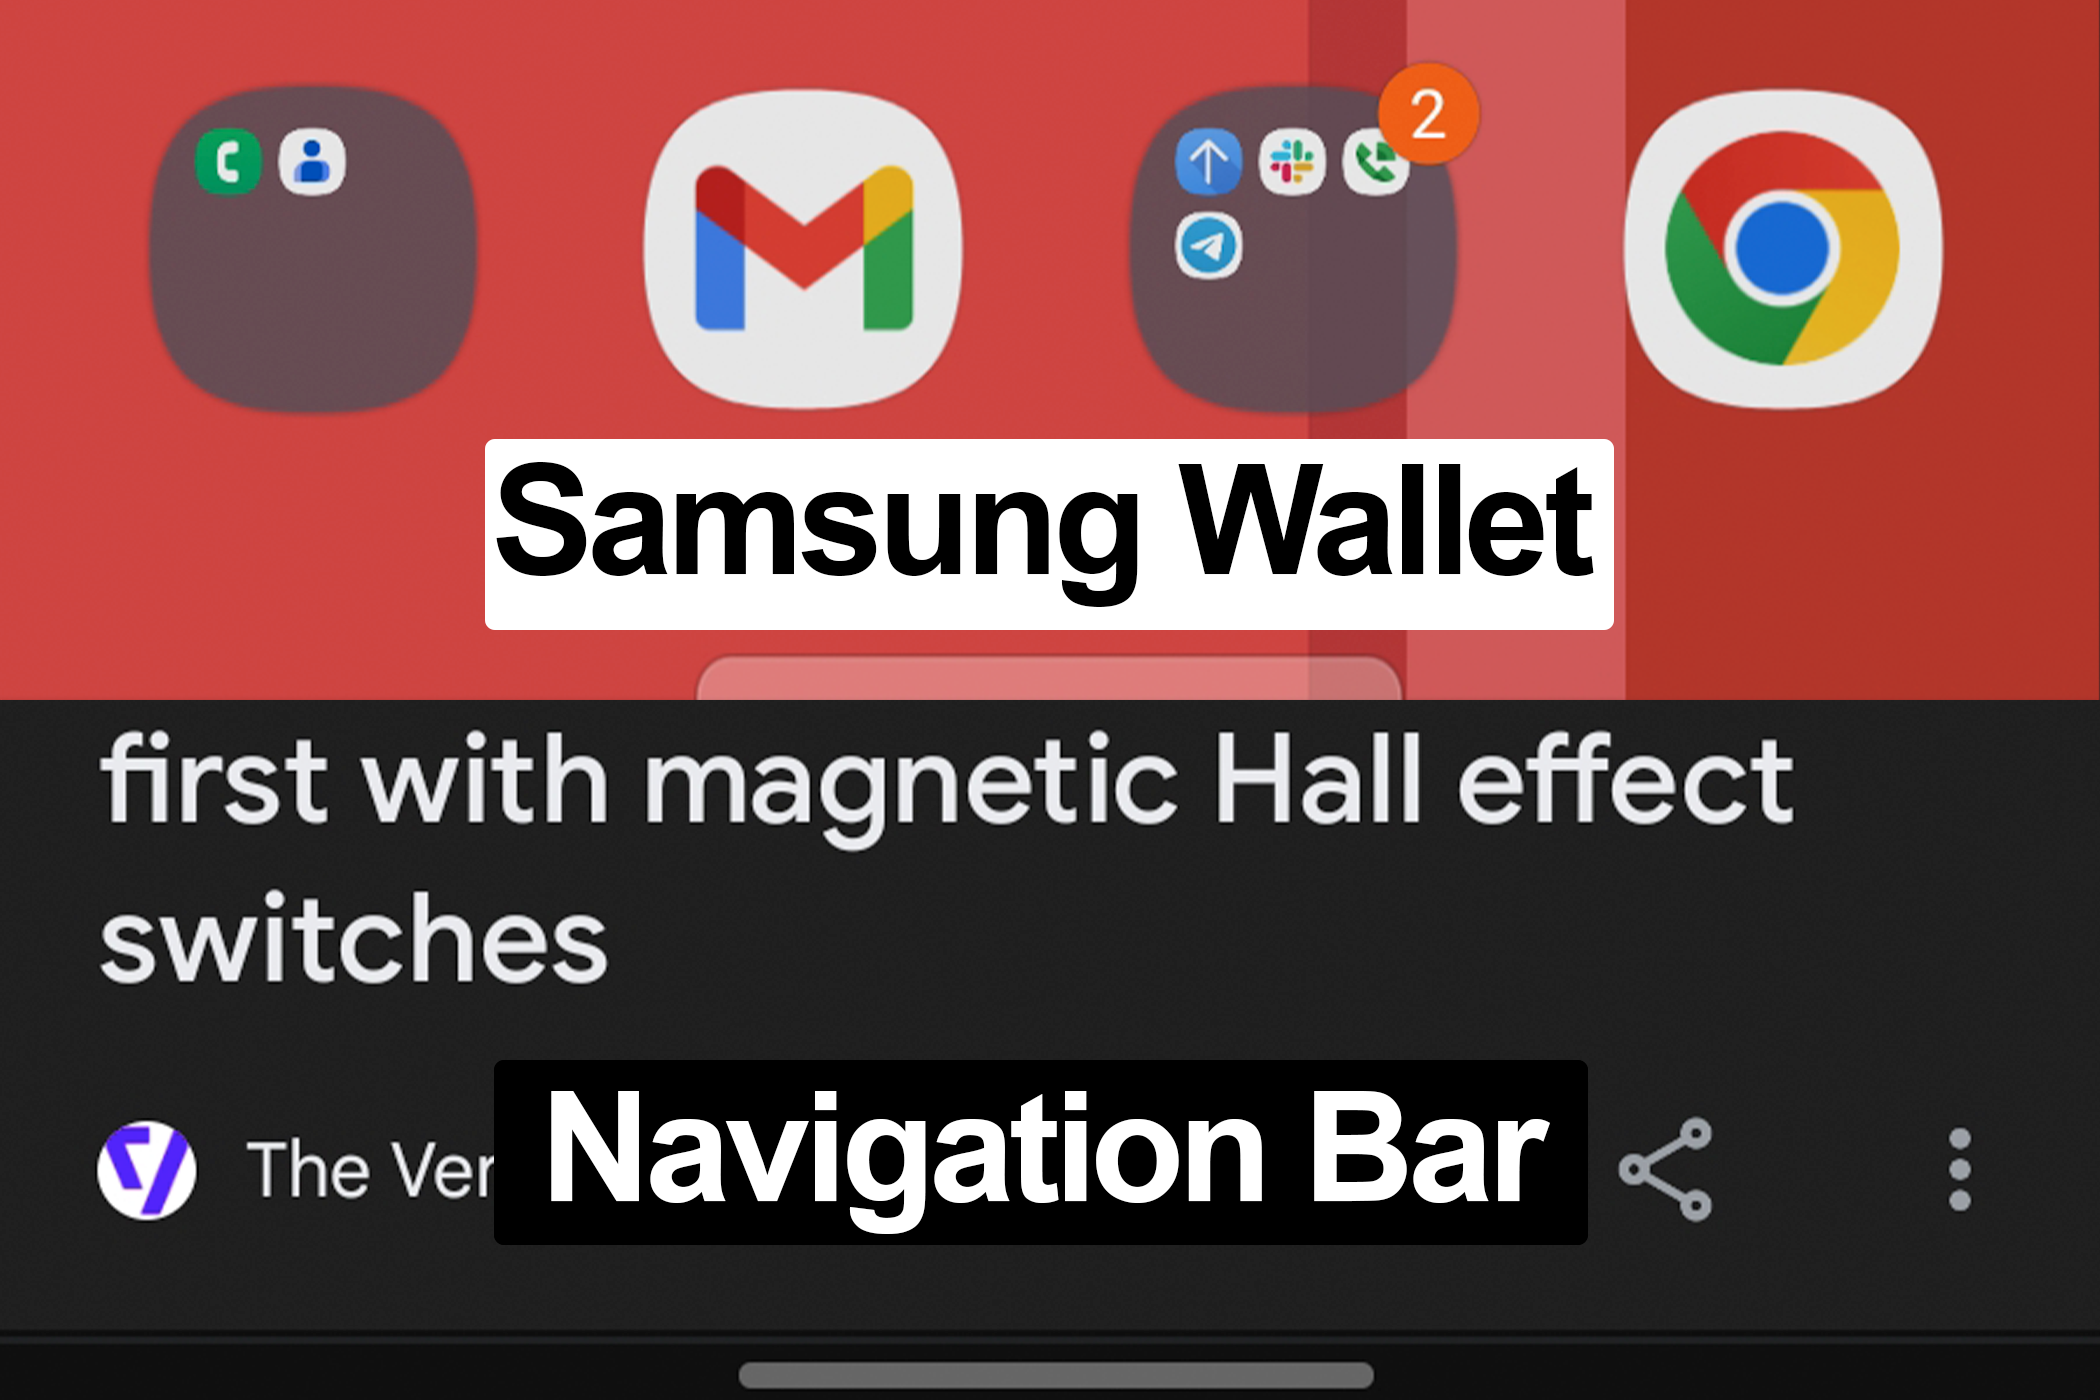 Samsung Wallet shortcut vs navigation bar